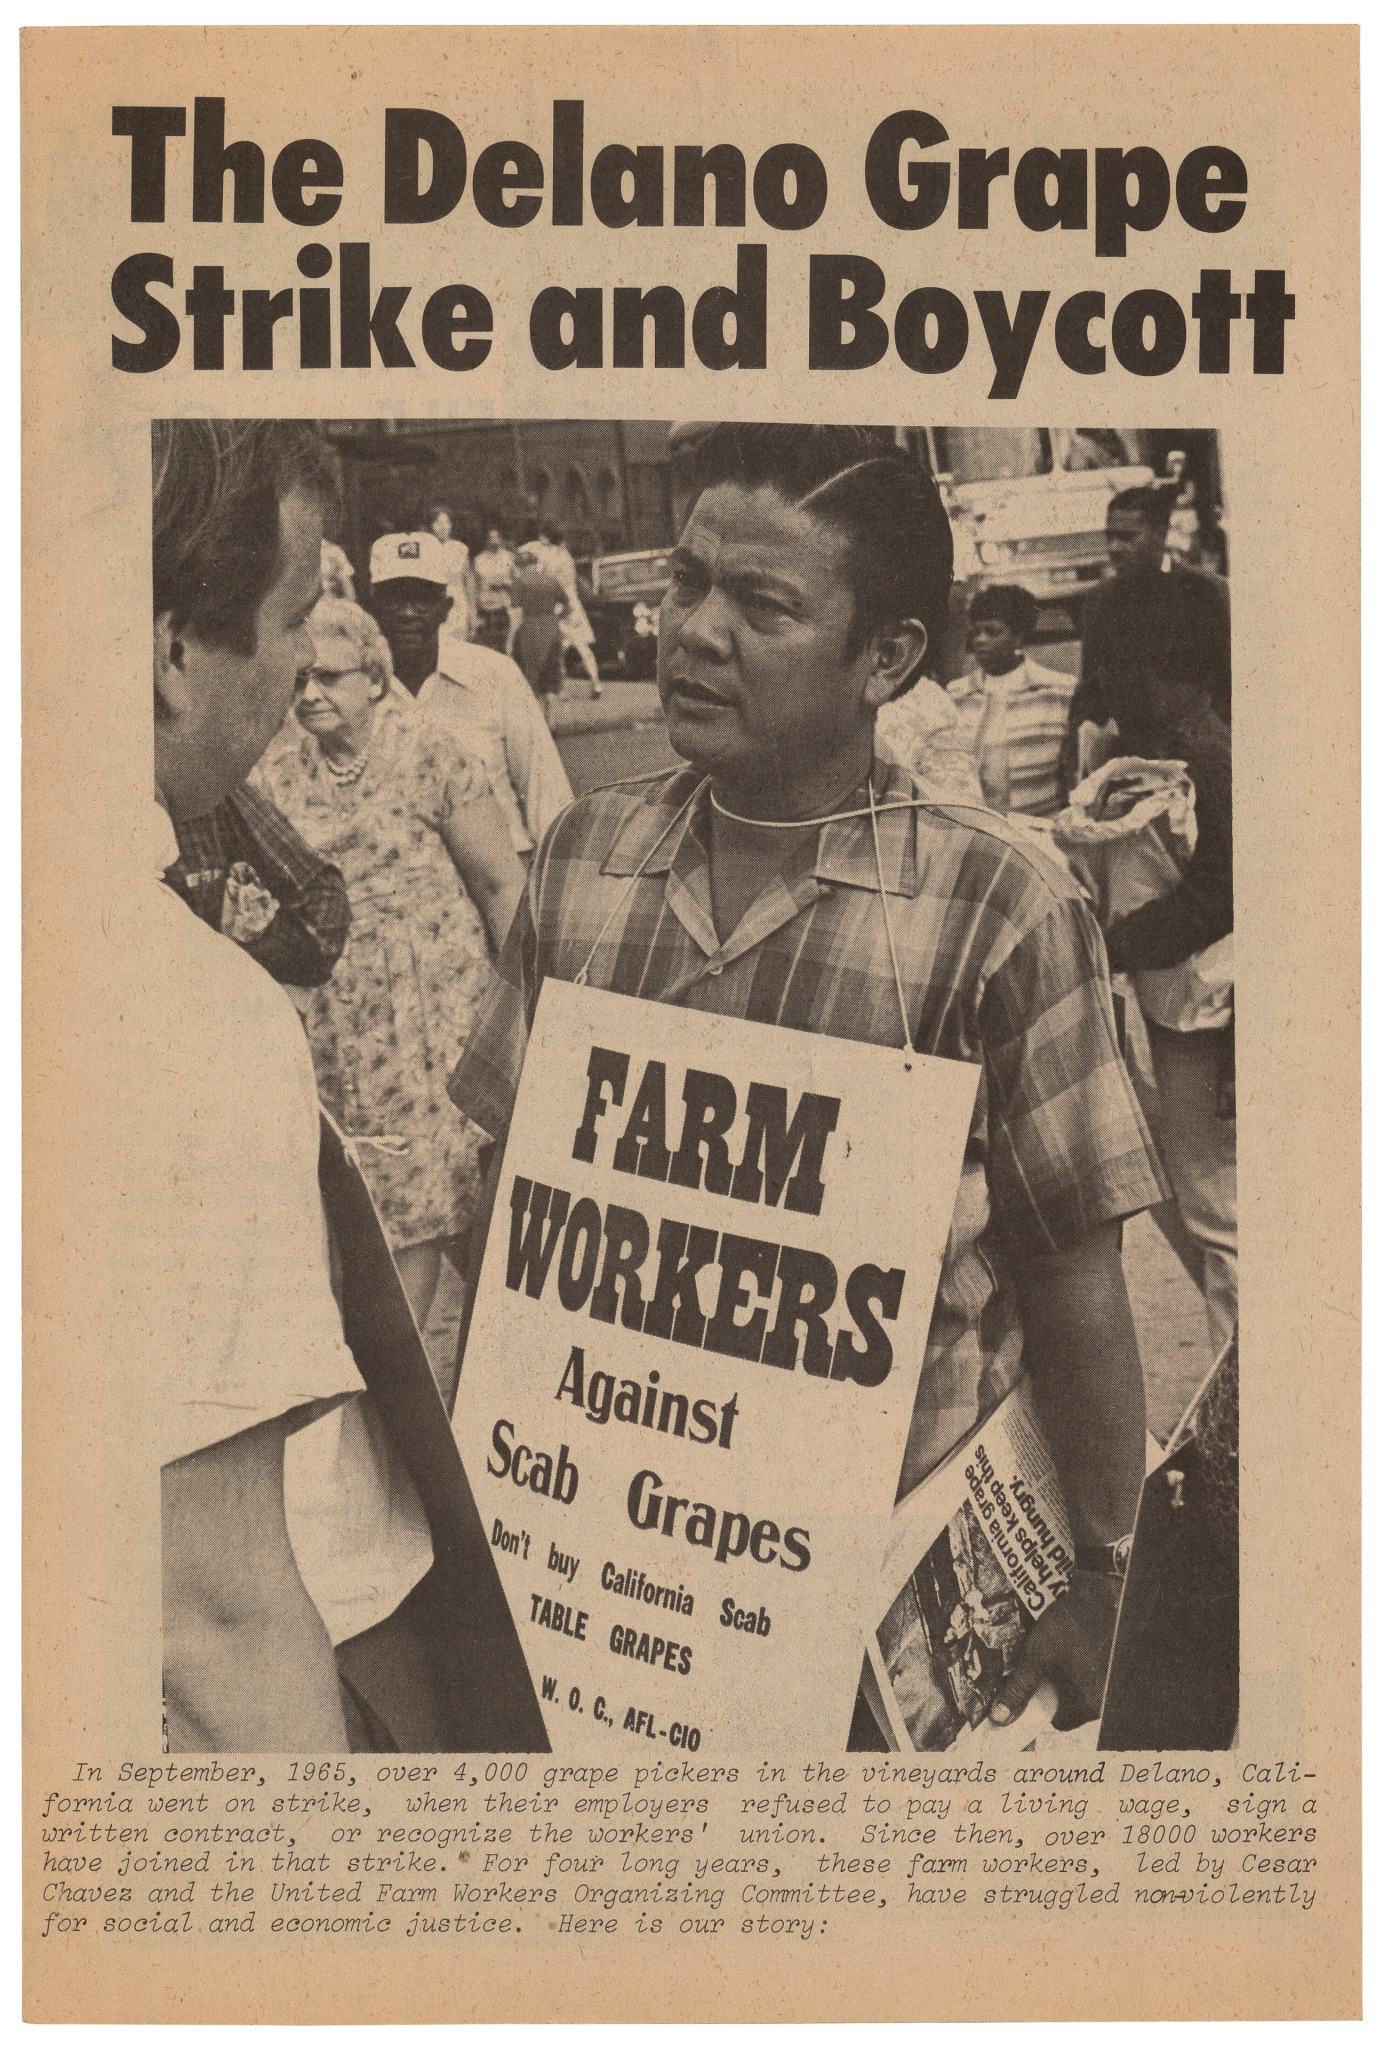 “The Delano Grape Strike and Boycott”, 1970 | Records of ...